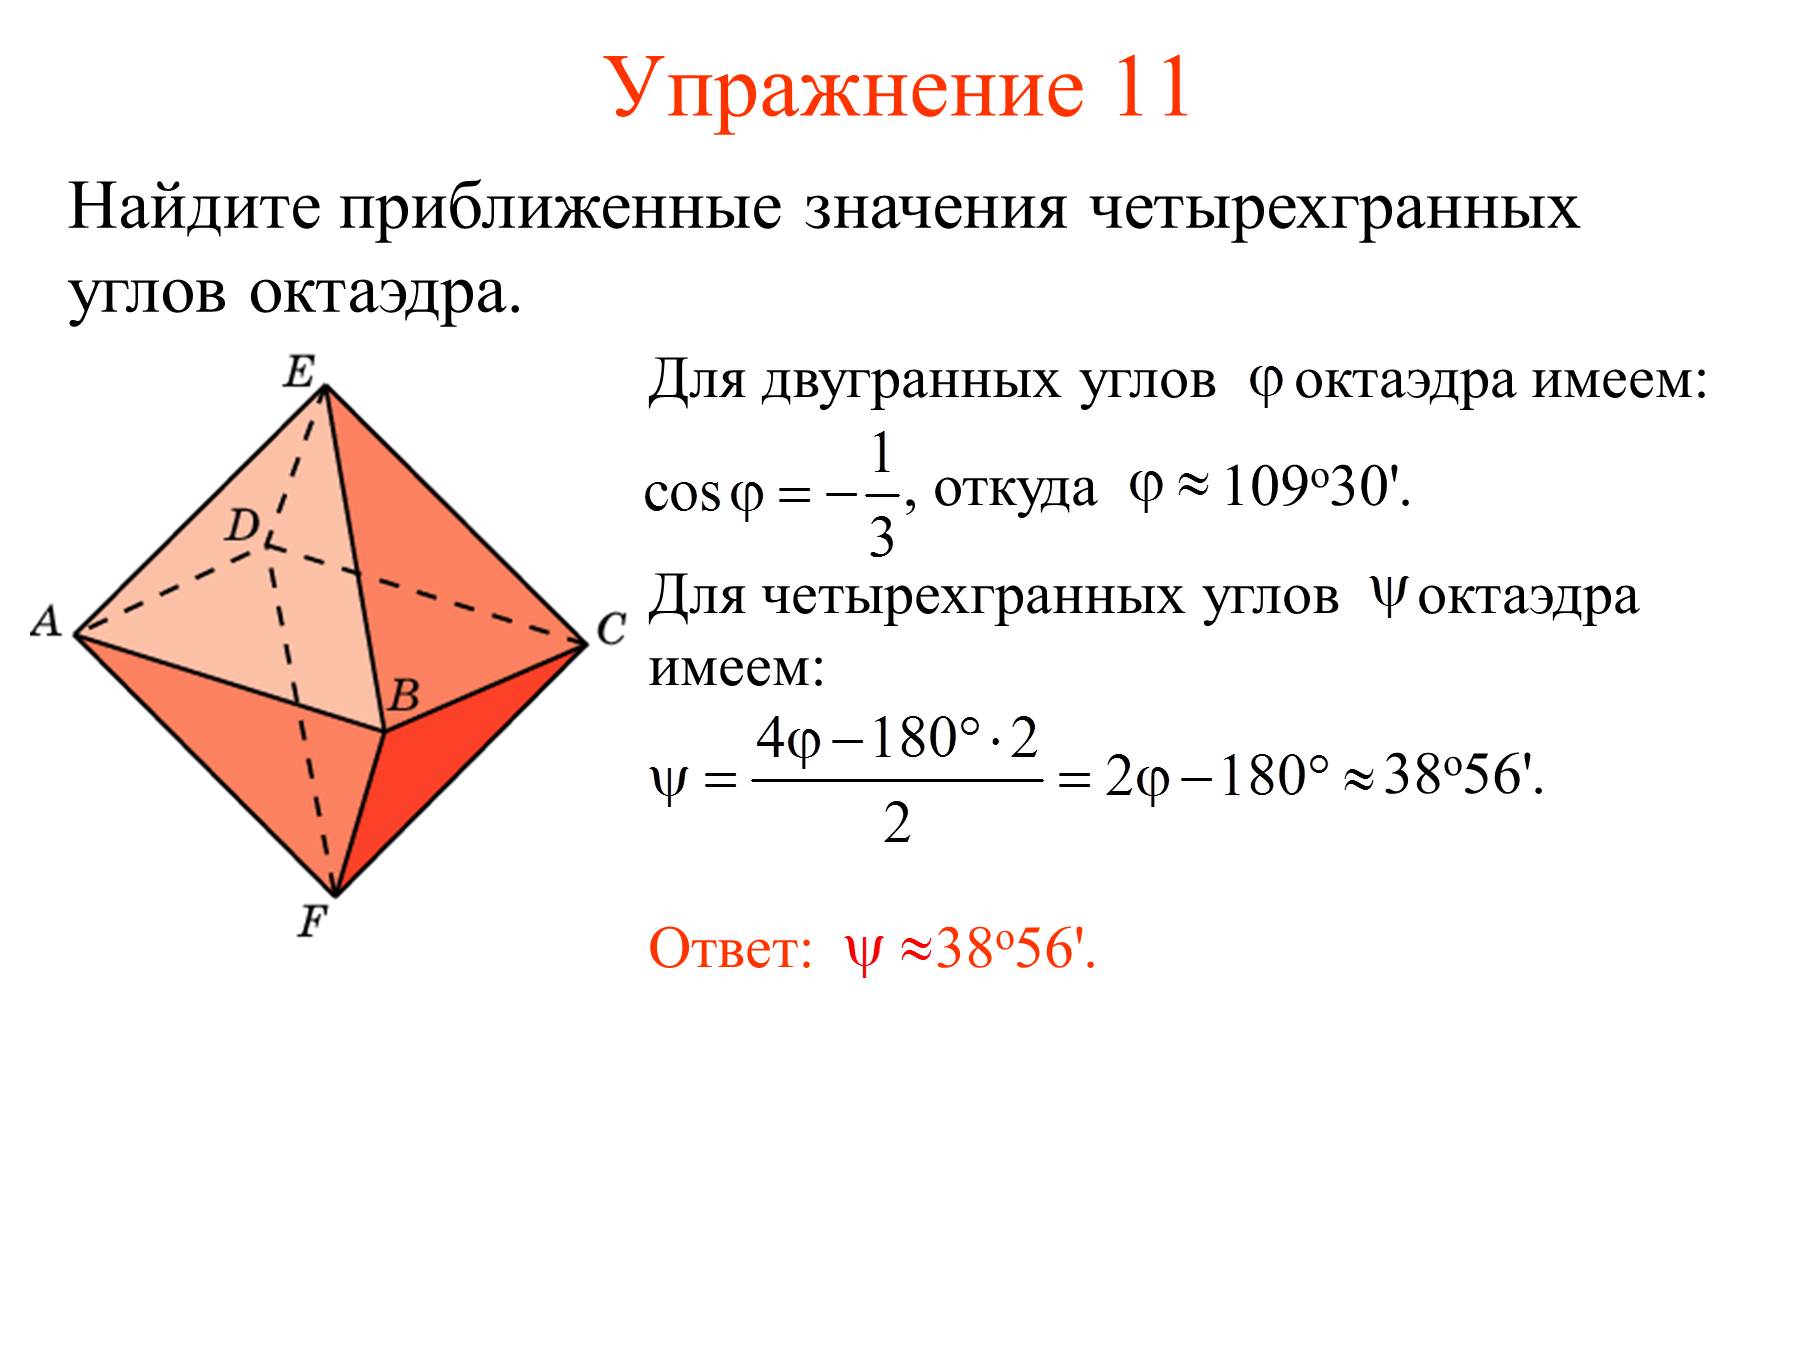 Теорема синусов для трехгранного угла. Трехгранный и многогранный углы. Трехгранный угол. Четырехгранный угол. Двугранный угол трехгранного угла.